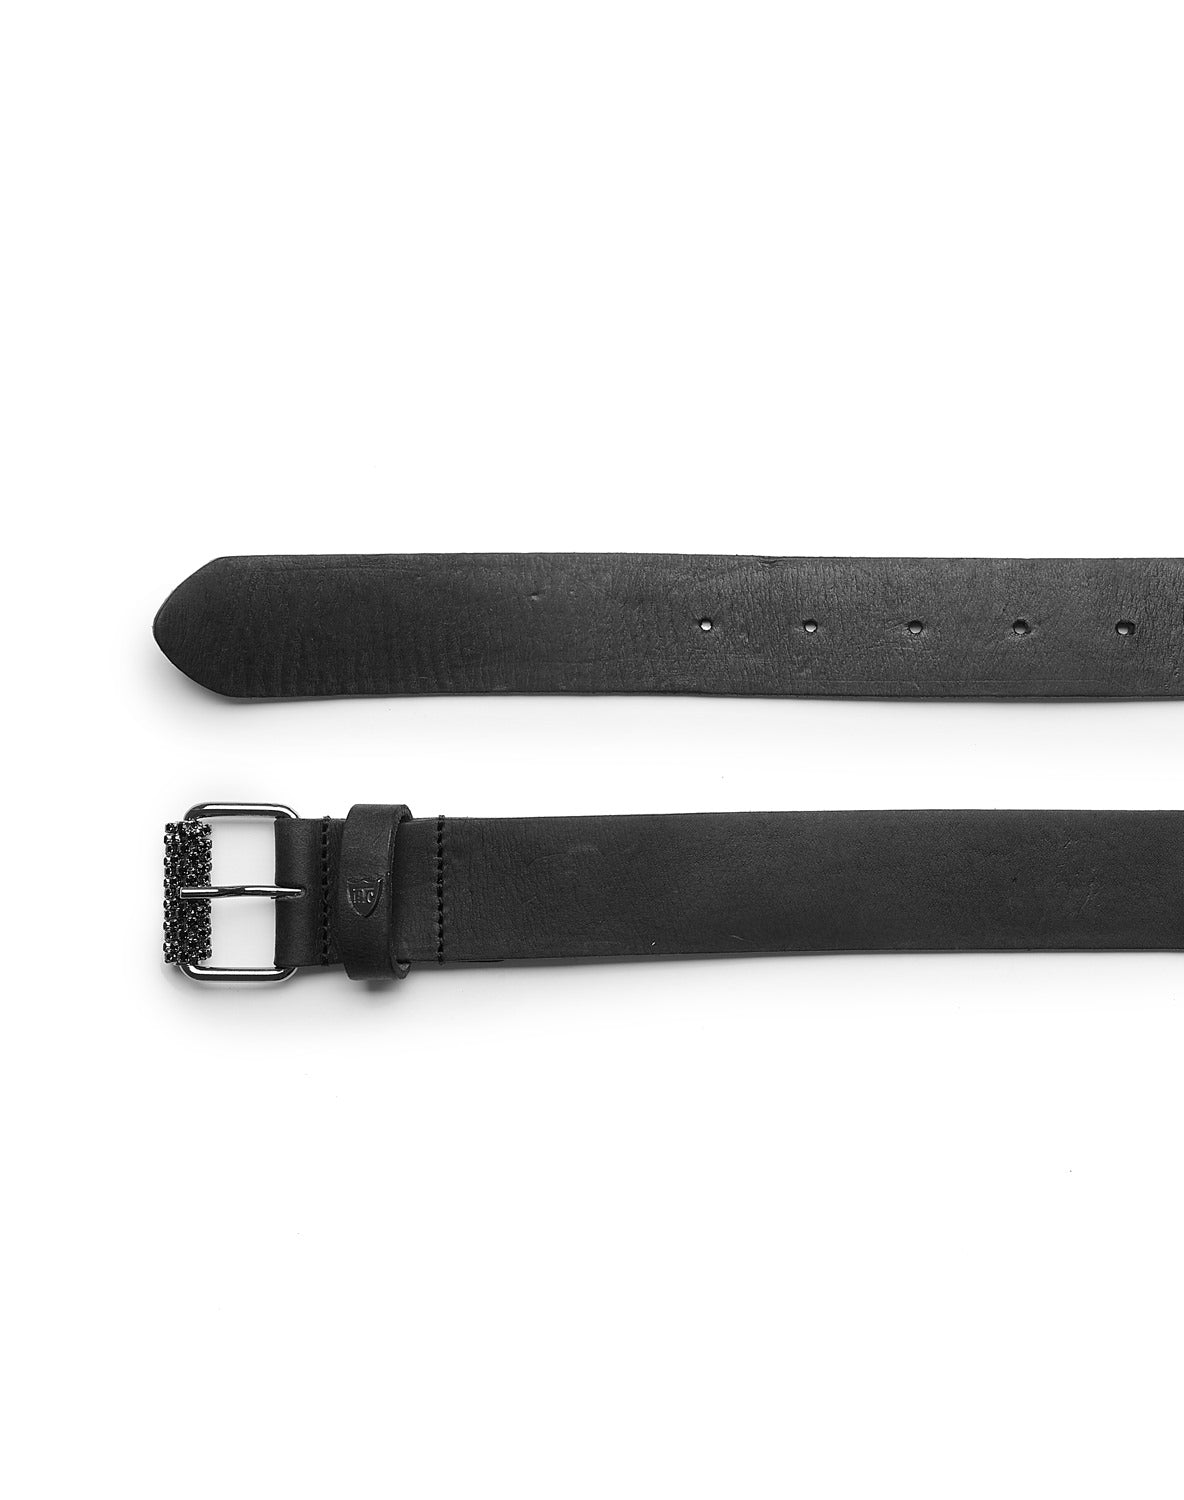 SPENCER BELT Leather belt. Brass buckle with Swarovski. 3,5 cm height HTC LOS ANGELES